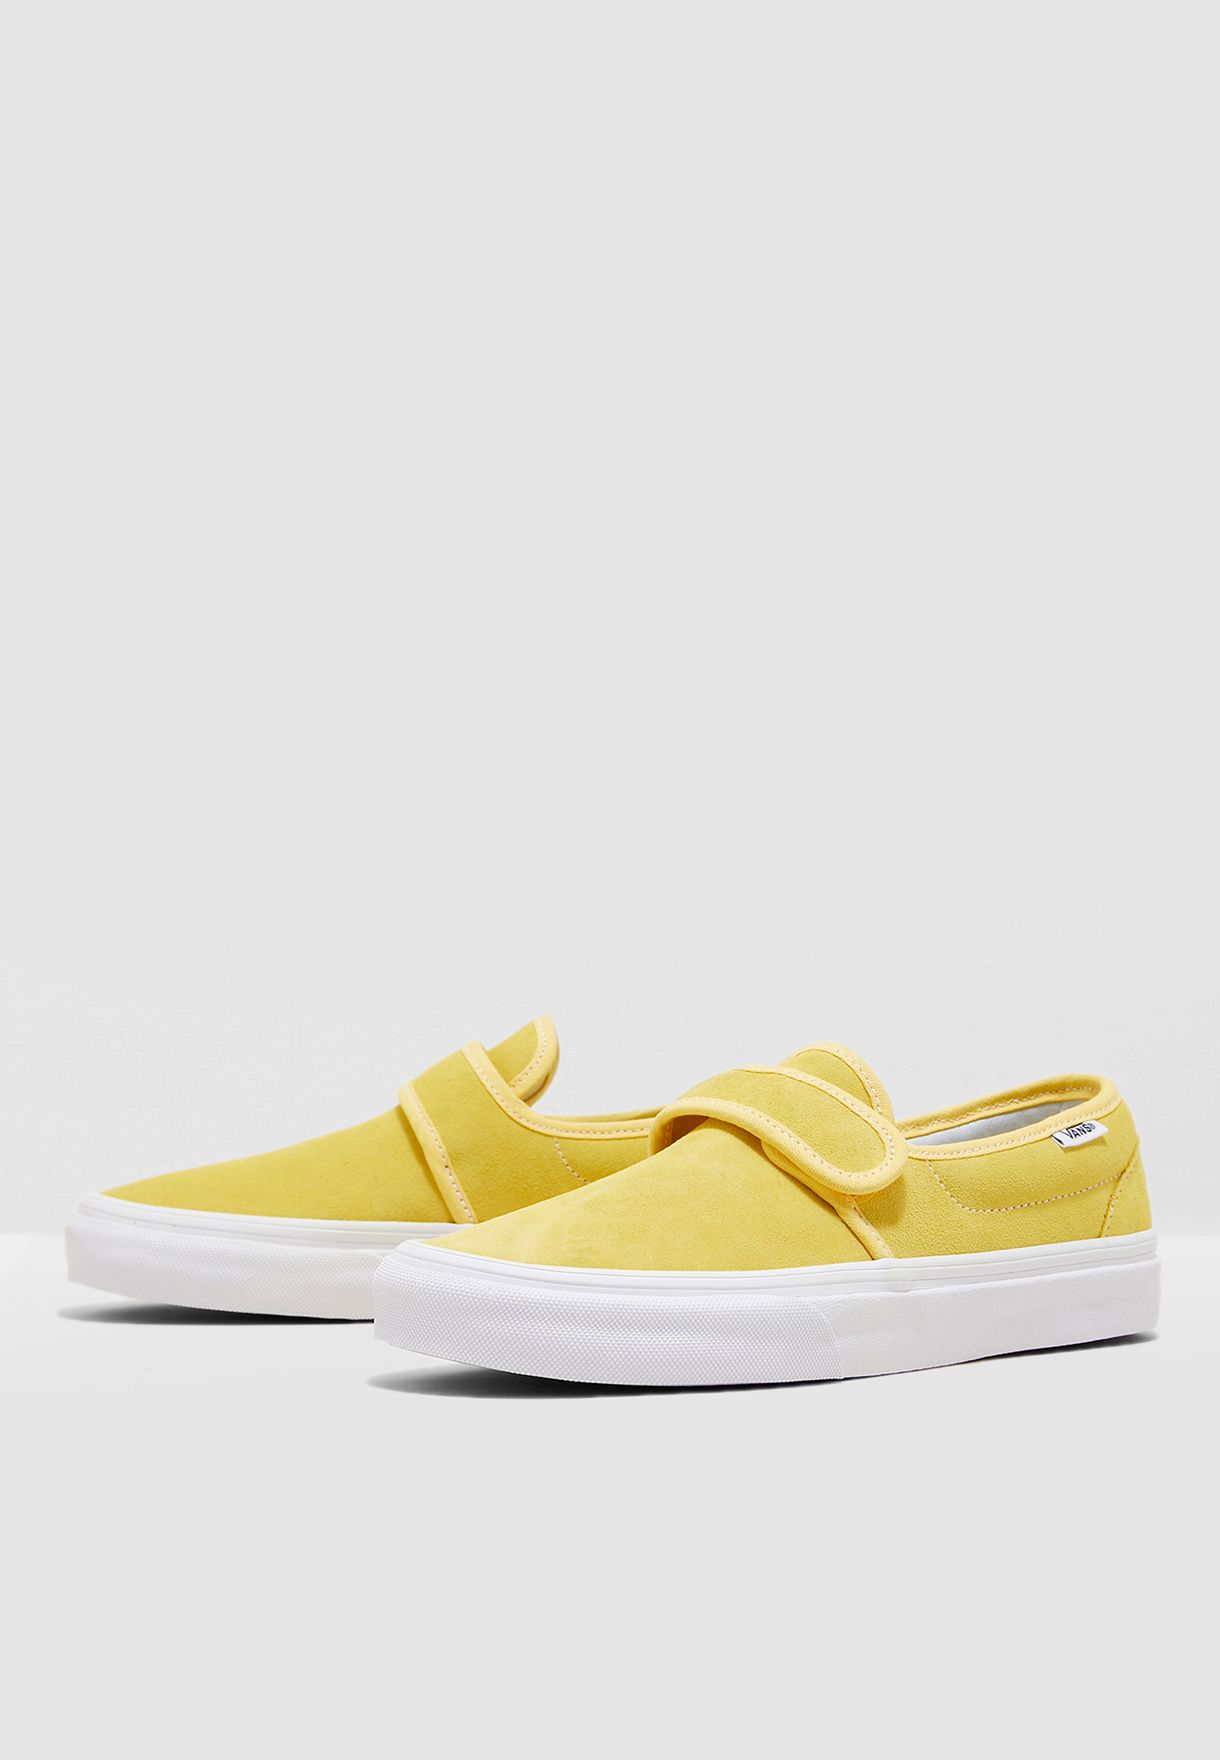 Vans Og 59 Lx Suede Slip-on Sneakers in Yellow for Men - Lyst